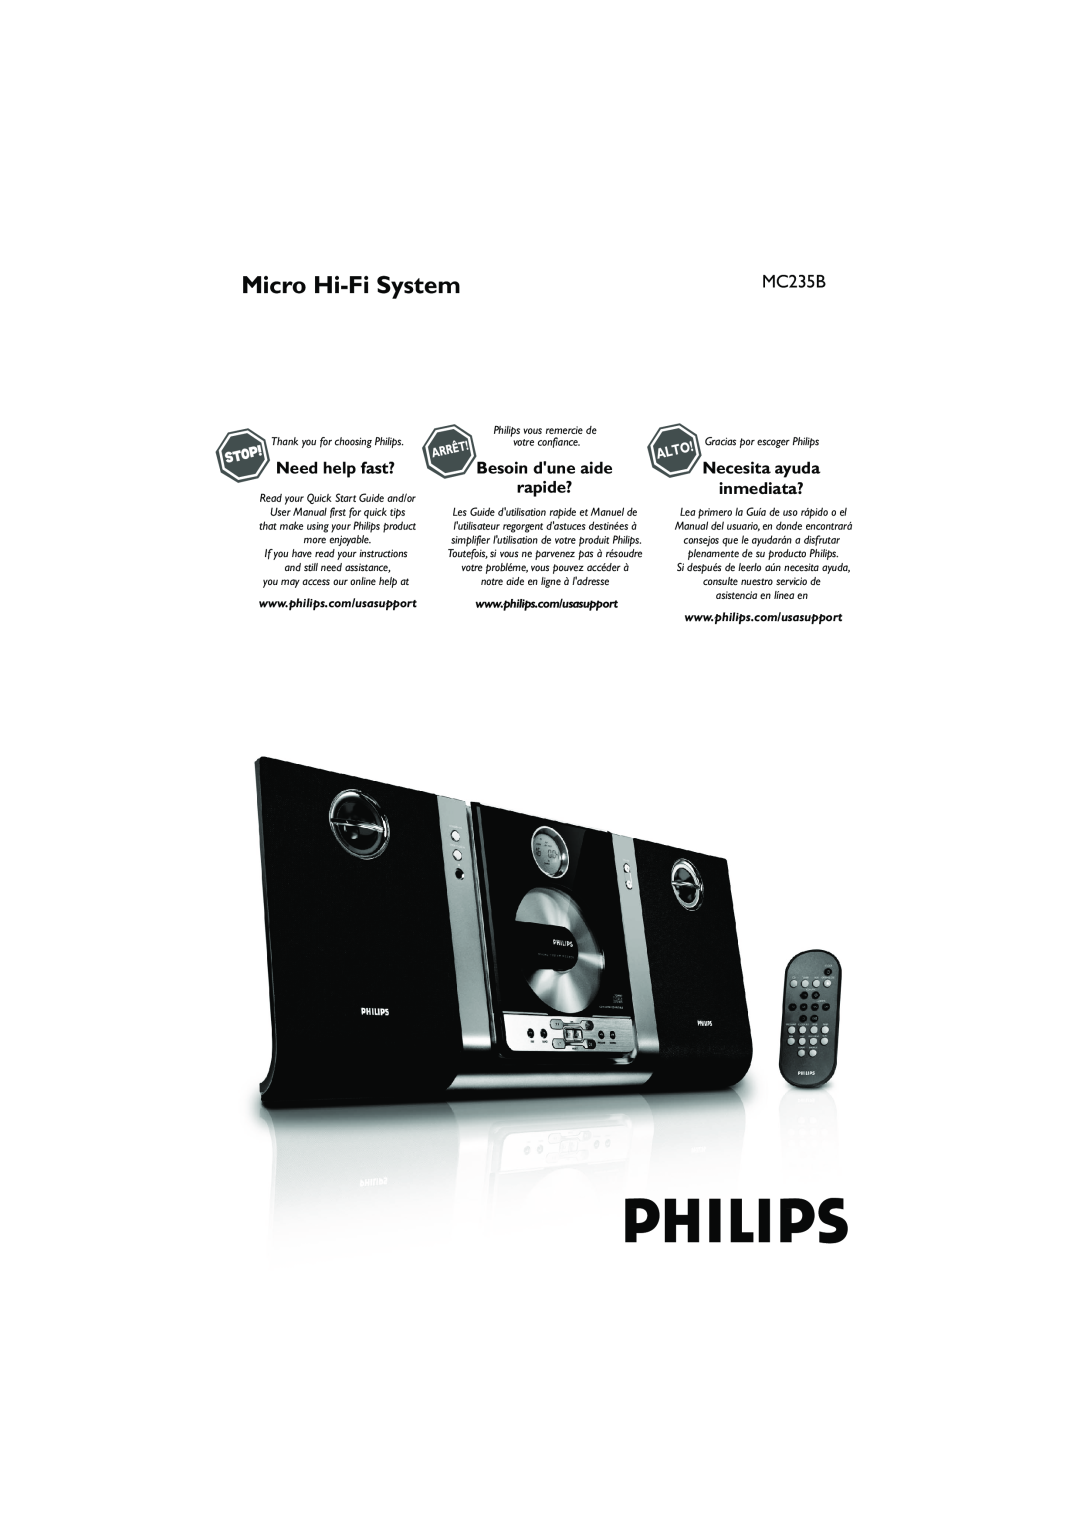 Philips MC235B/37 quick start Micro Hi-FiSystem, Besoin dune aide, Need help fast?, Necesita ayuda, inmediata?, rapide? 